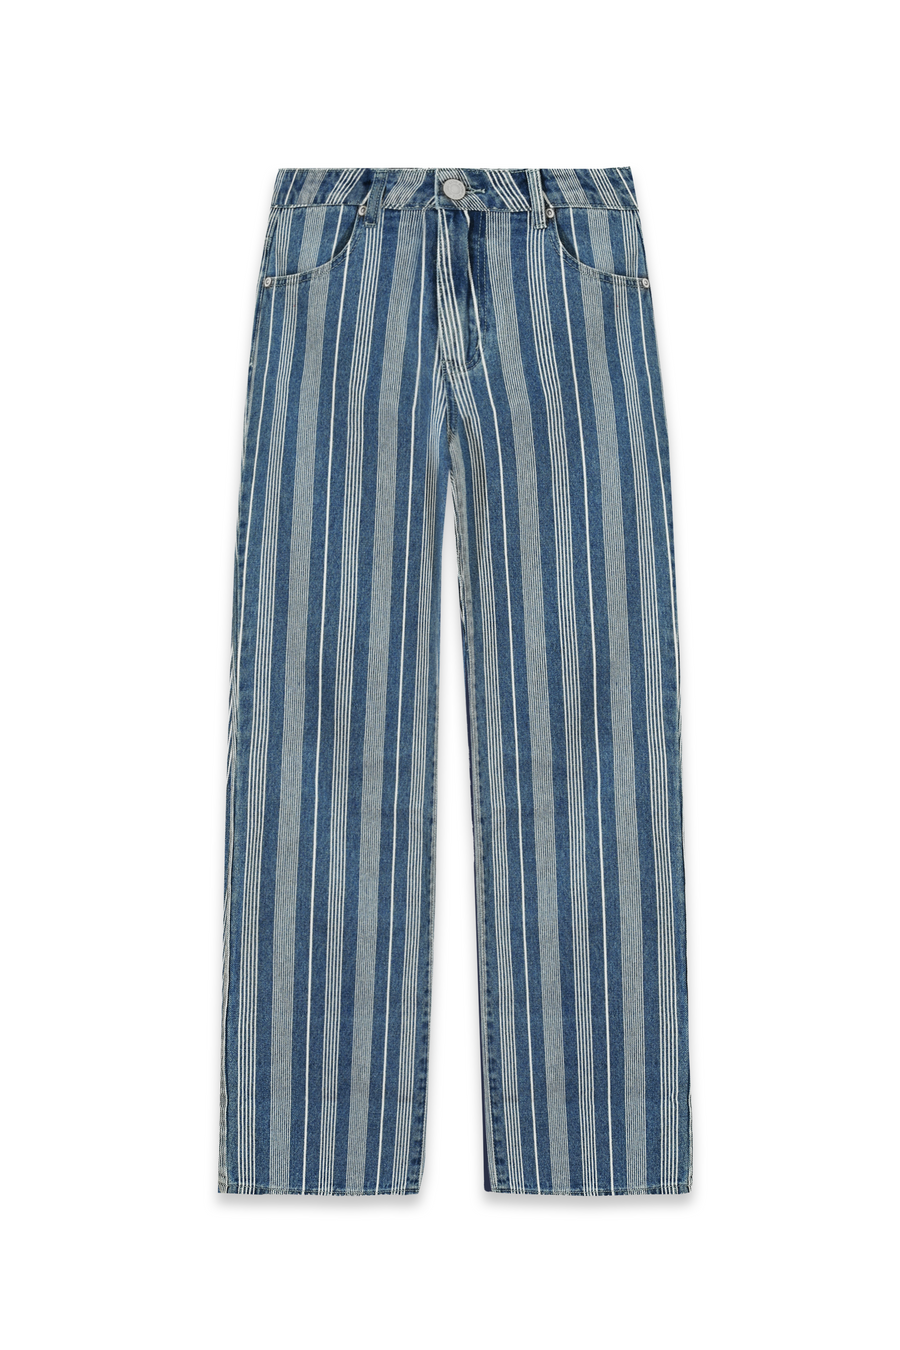 Vista Stripe Jeans